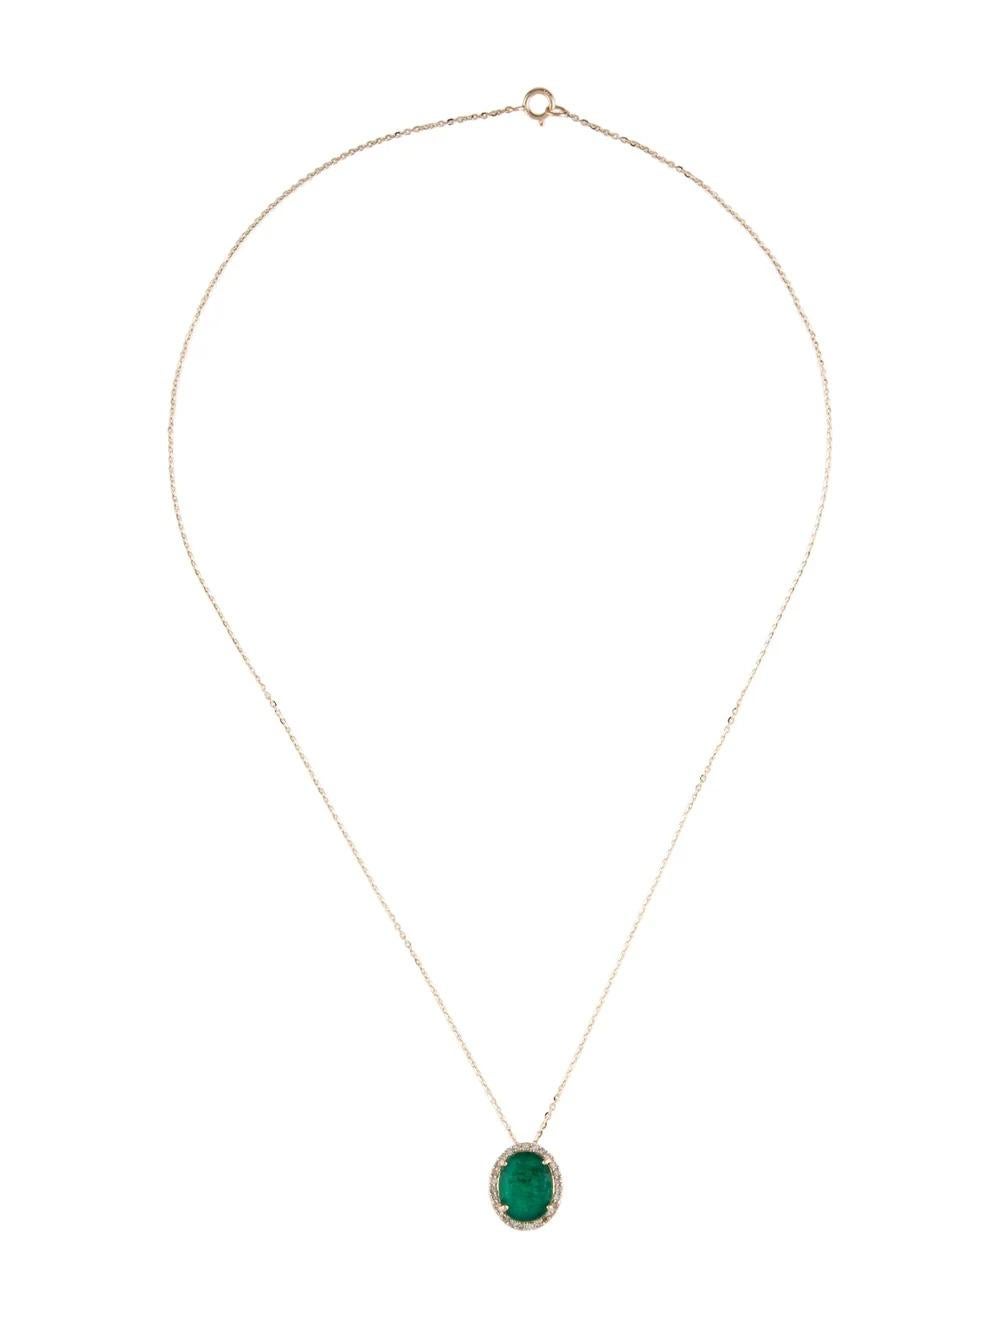 Oval Cut Vintage 14K Emerald & Diamond Pendant Necklace - 1.98ct Stunning Jewelry Piece